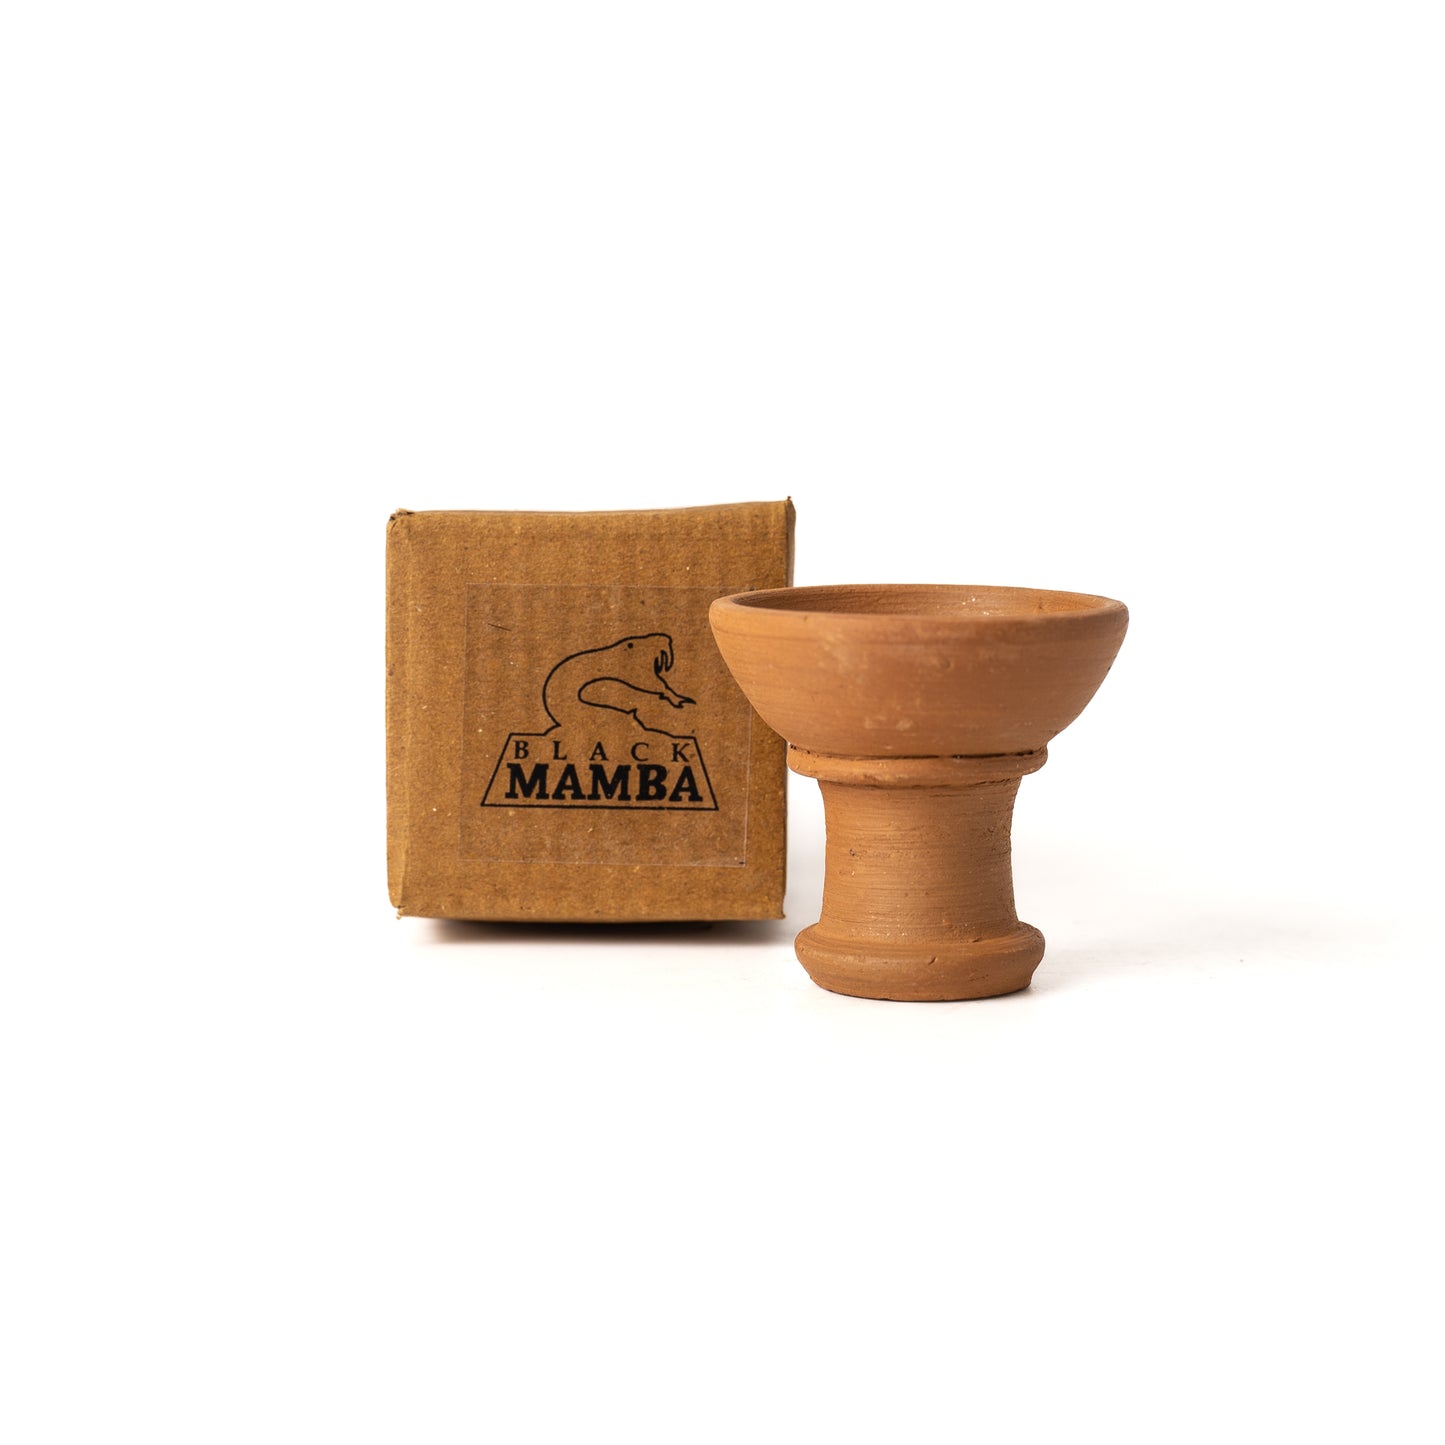 Black Mamba Clay Bowl + Foil + Rose Gold Fork